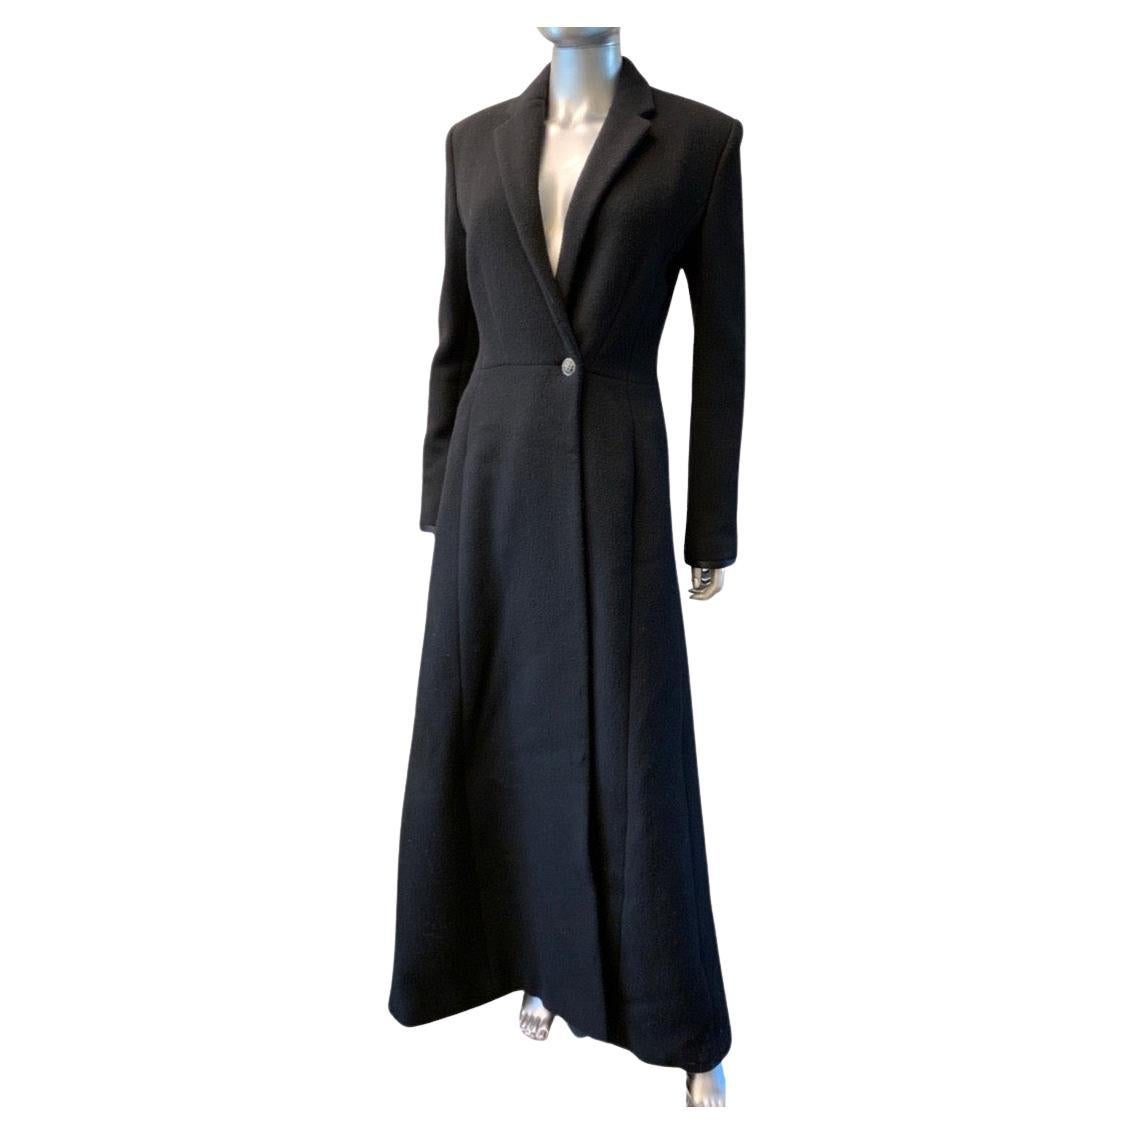 Ralph Lauren Black Label "Anna Karenina" Black Cashmere Coat Size 8 For Sale